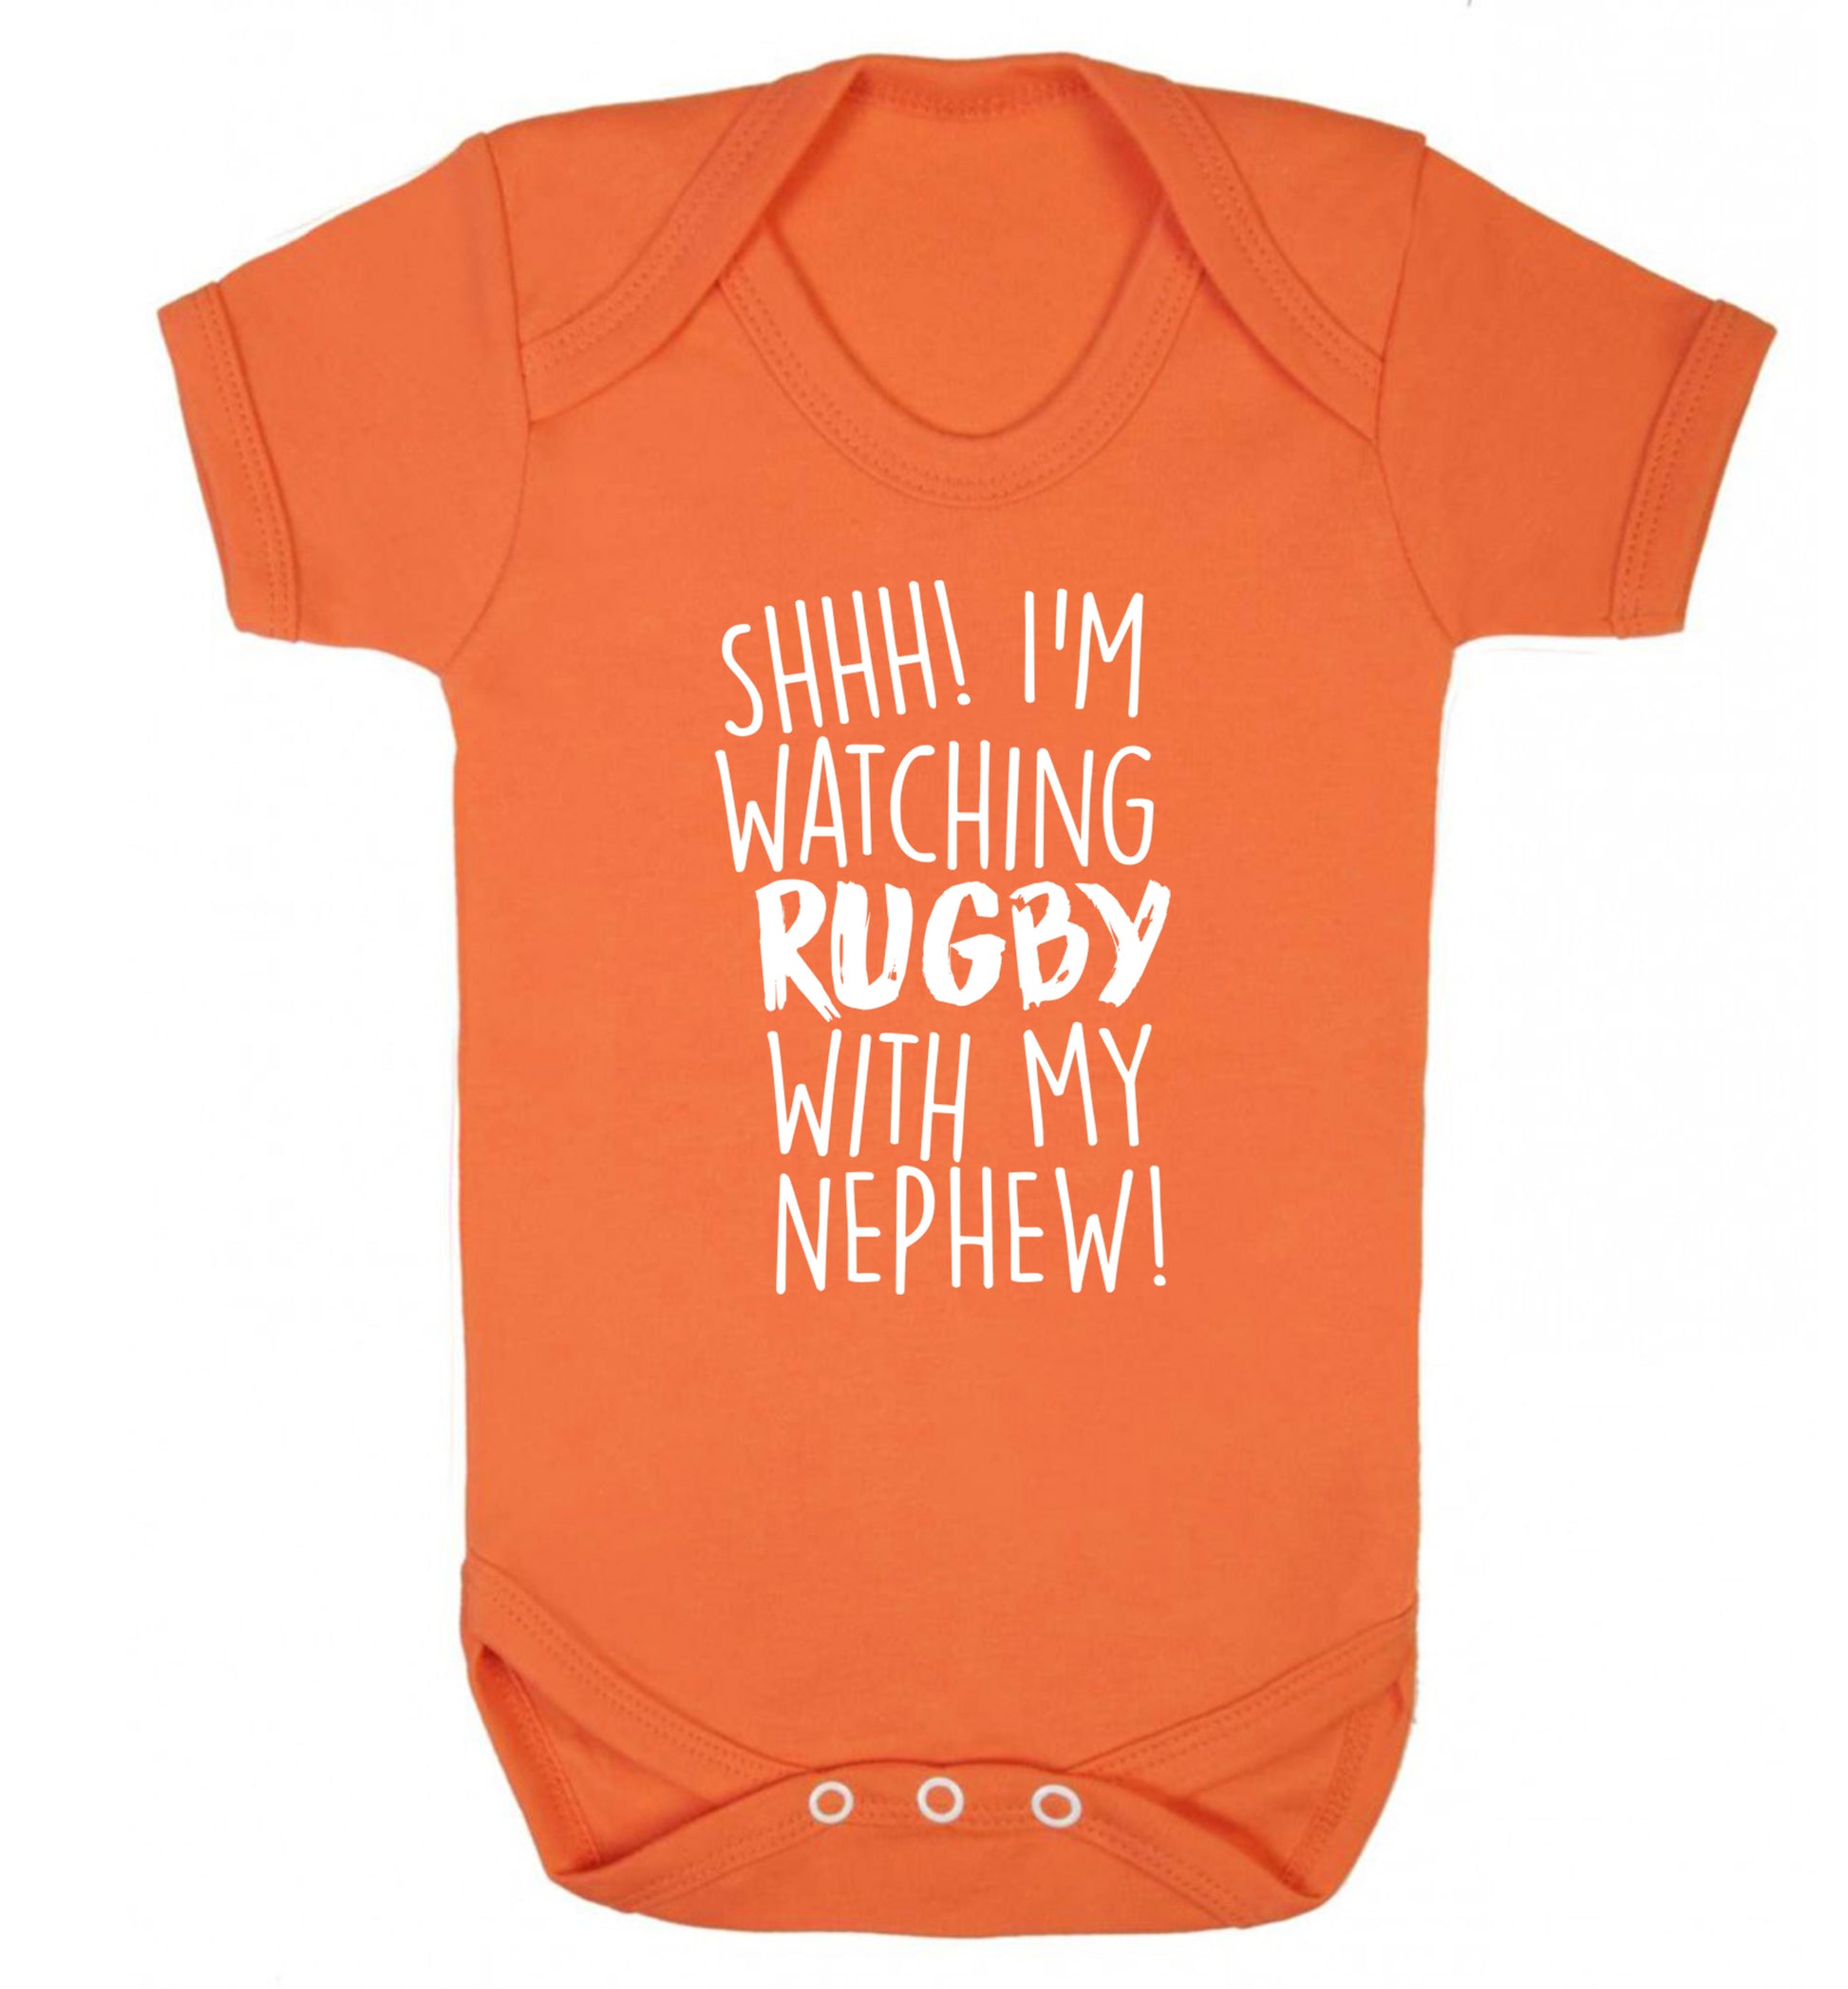 Shh.. I'm watching rugby with my nephew Baby Vest orange 18-24 months